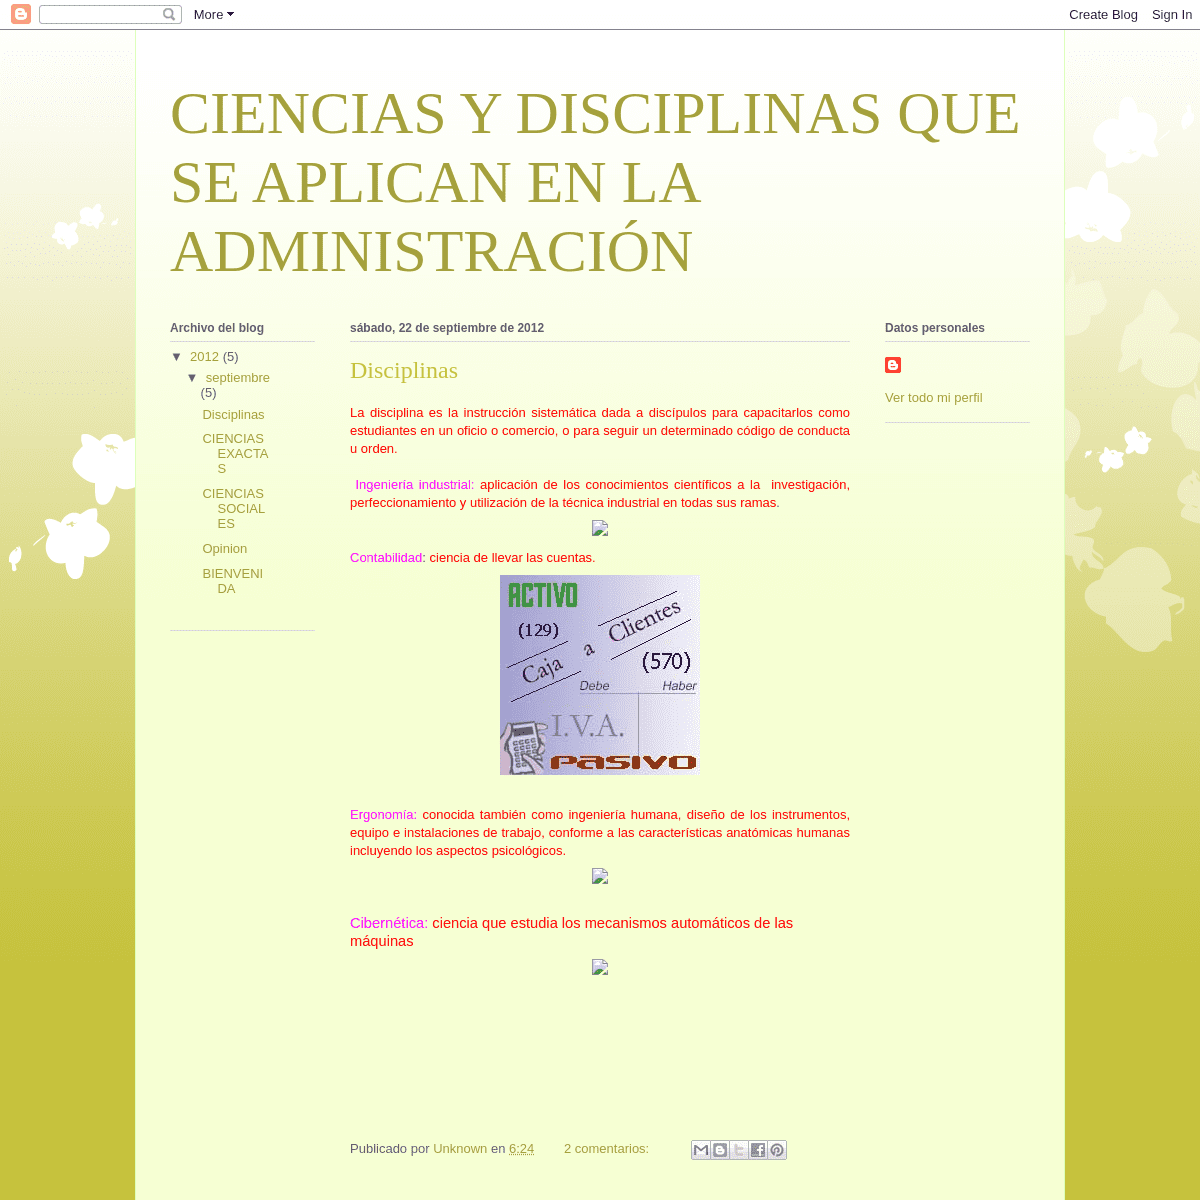 A complete backup of cienciasydisciplinasenadministracion.blogspot.com